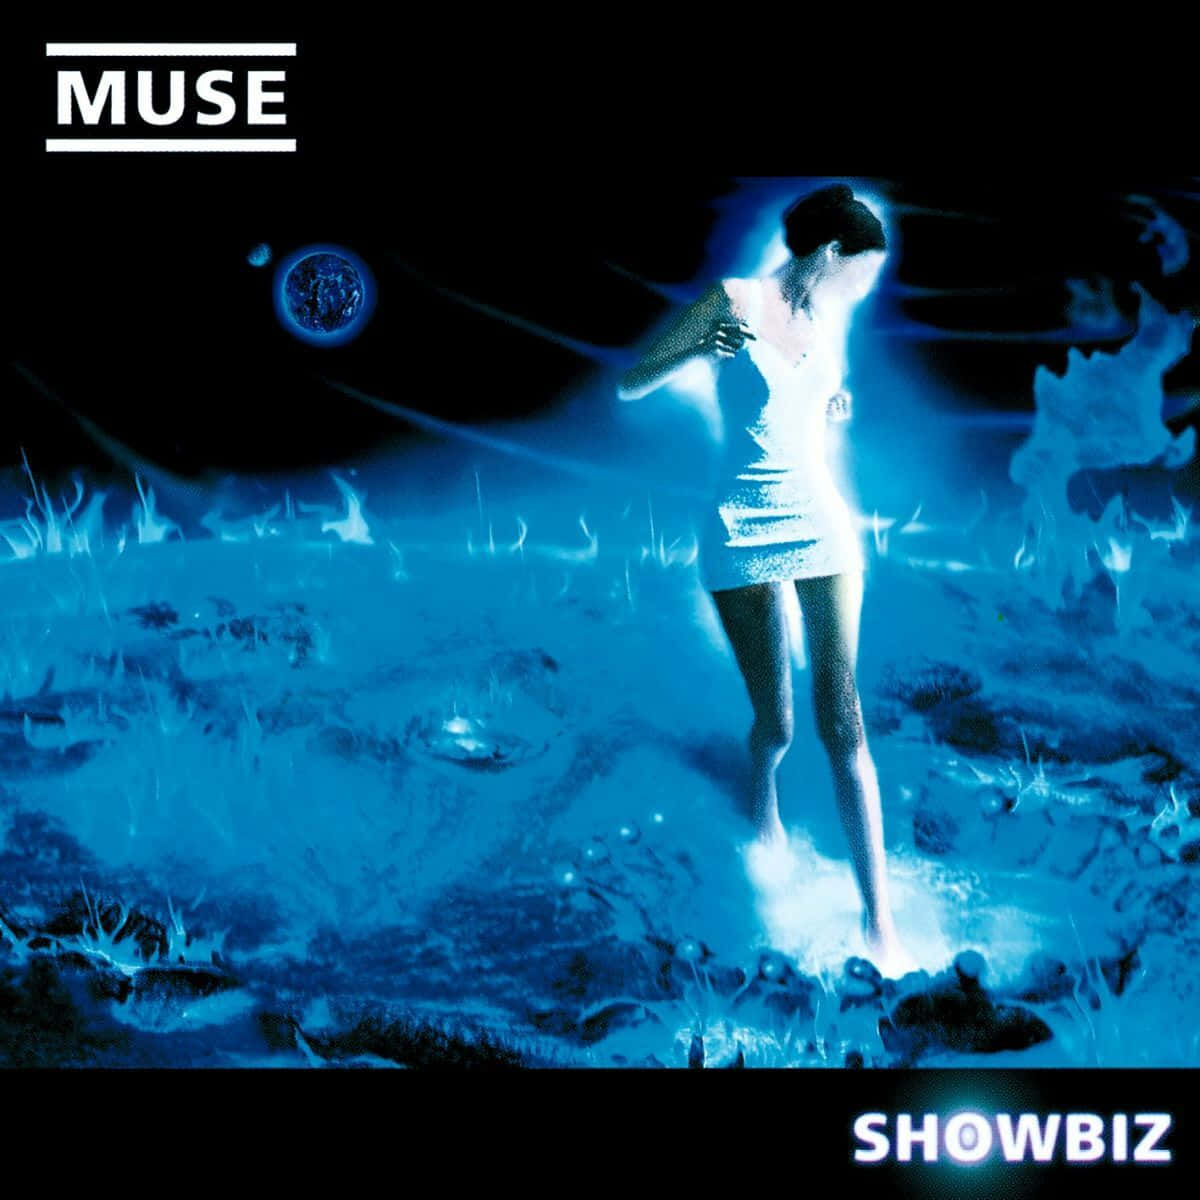 Muse Showbiz Album Cover Wallpaper